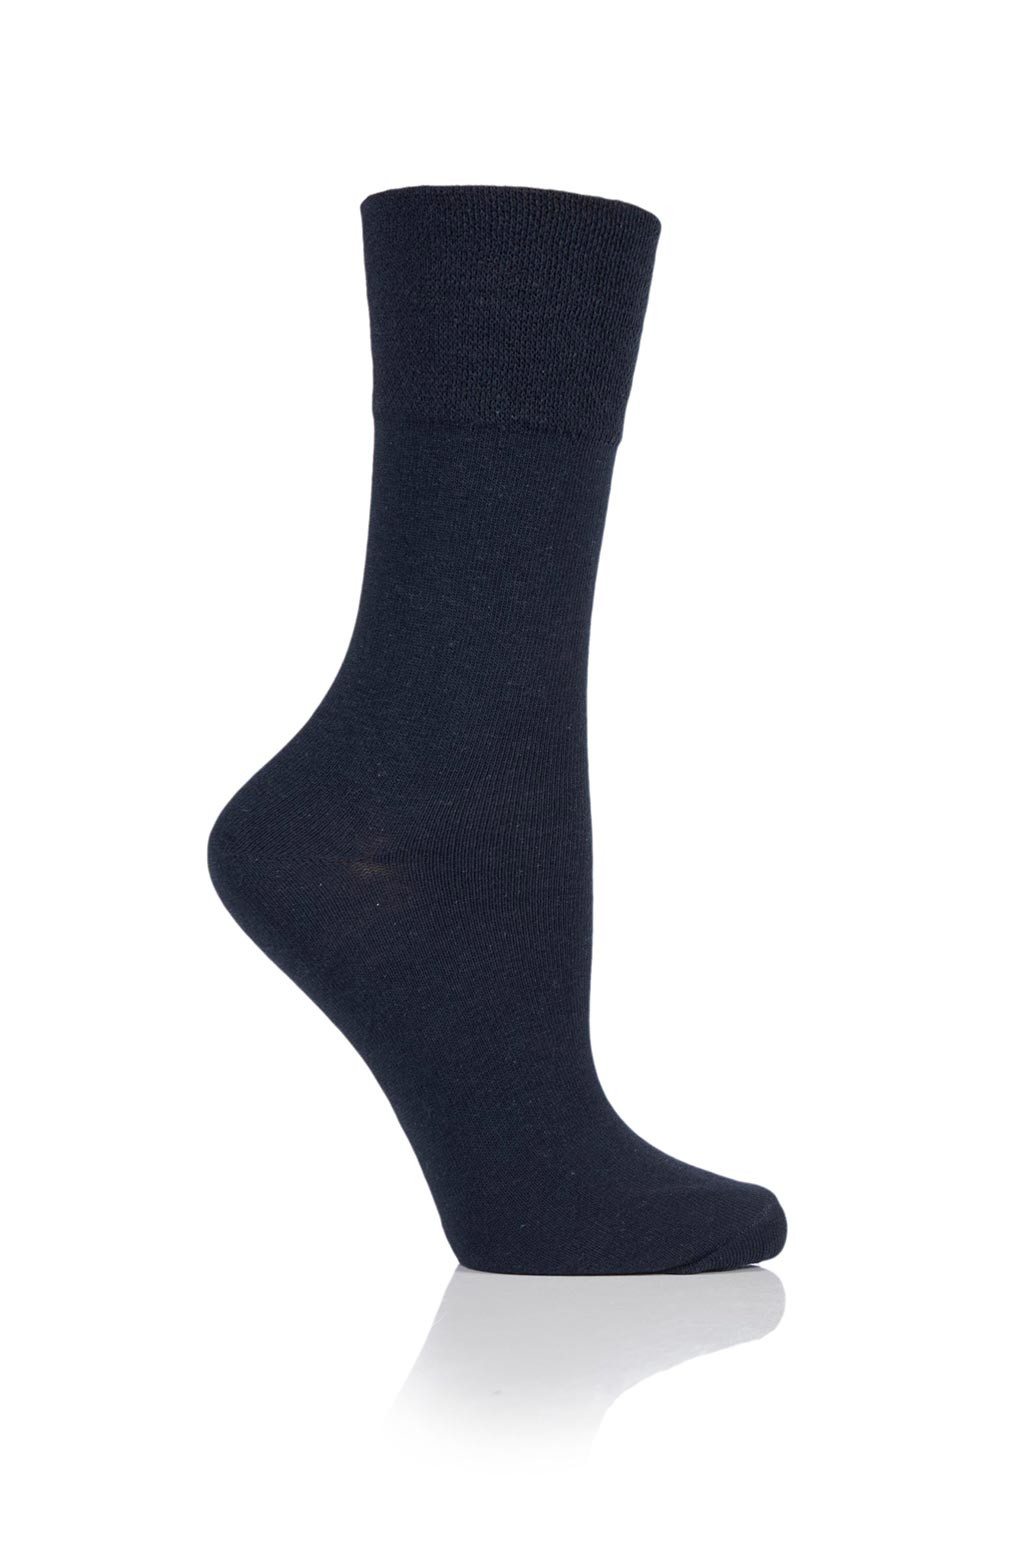 Women's Merino Crew Non-Slip Grip Cabin & Christmas Socks - Navy-1 Pair /  Shoe Size: 5-8